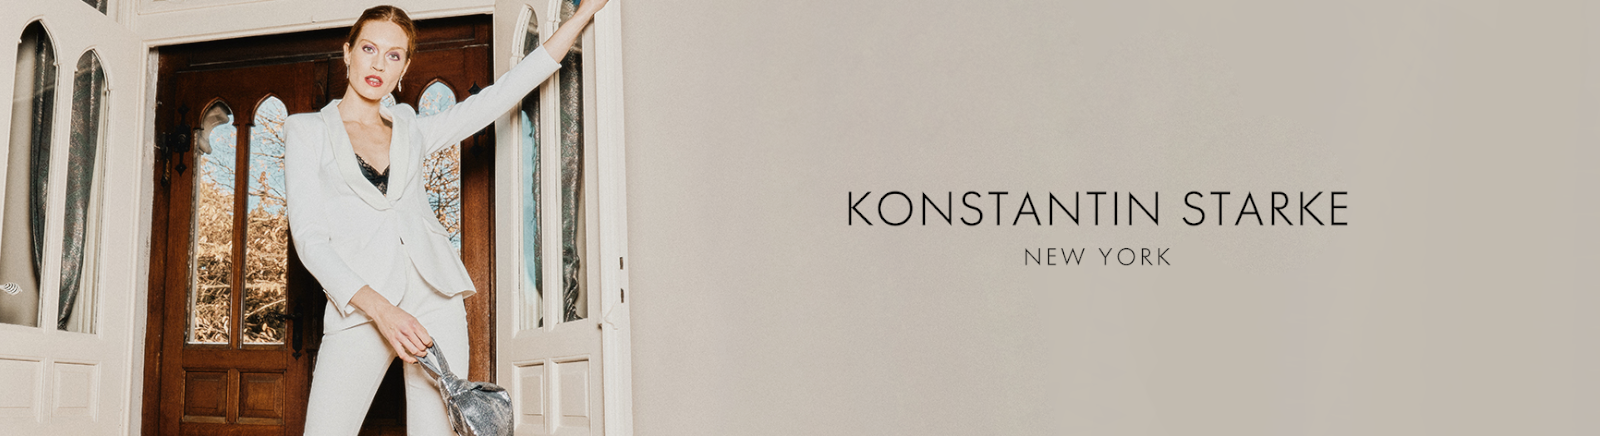 Juppen: Konstantin Starke Chelsea-Boots für Damen online shoppen